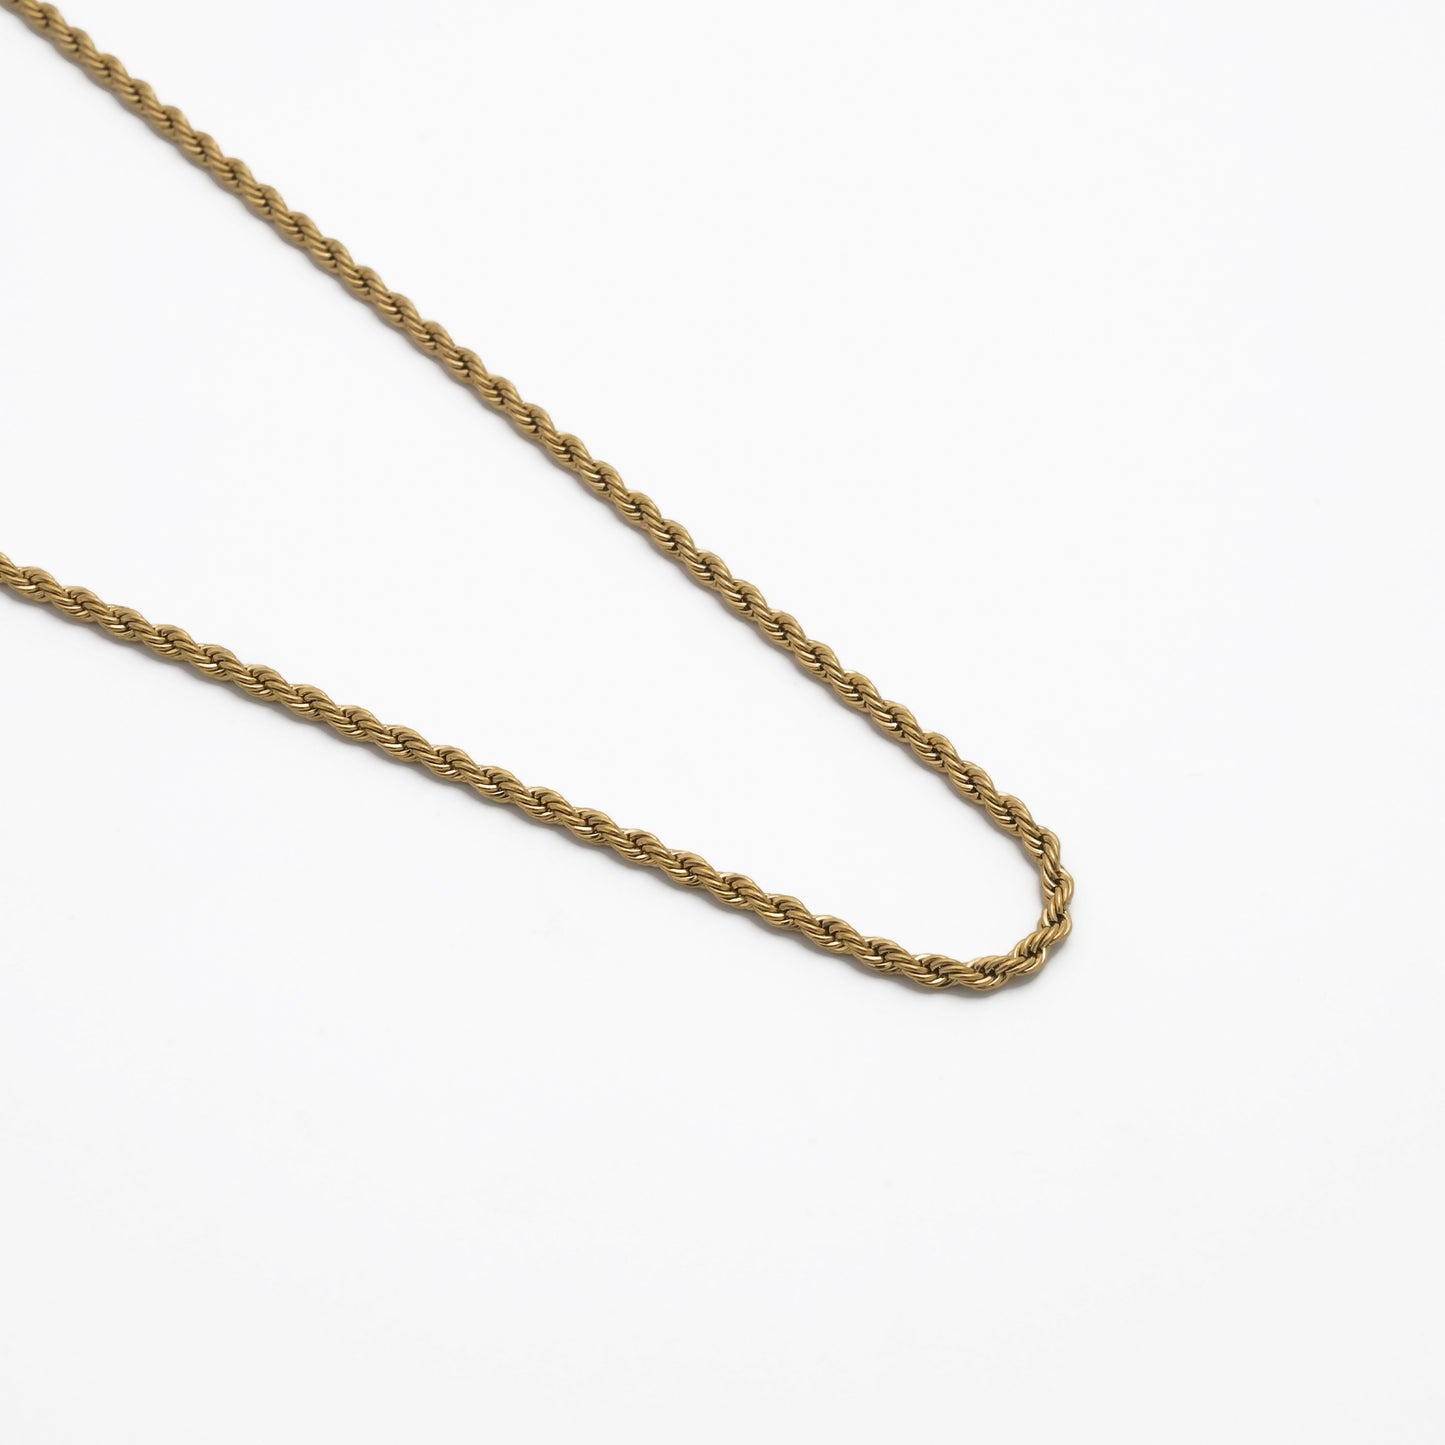 Buy Fashionable Gold Chain For Women/Girls